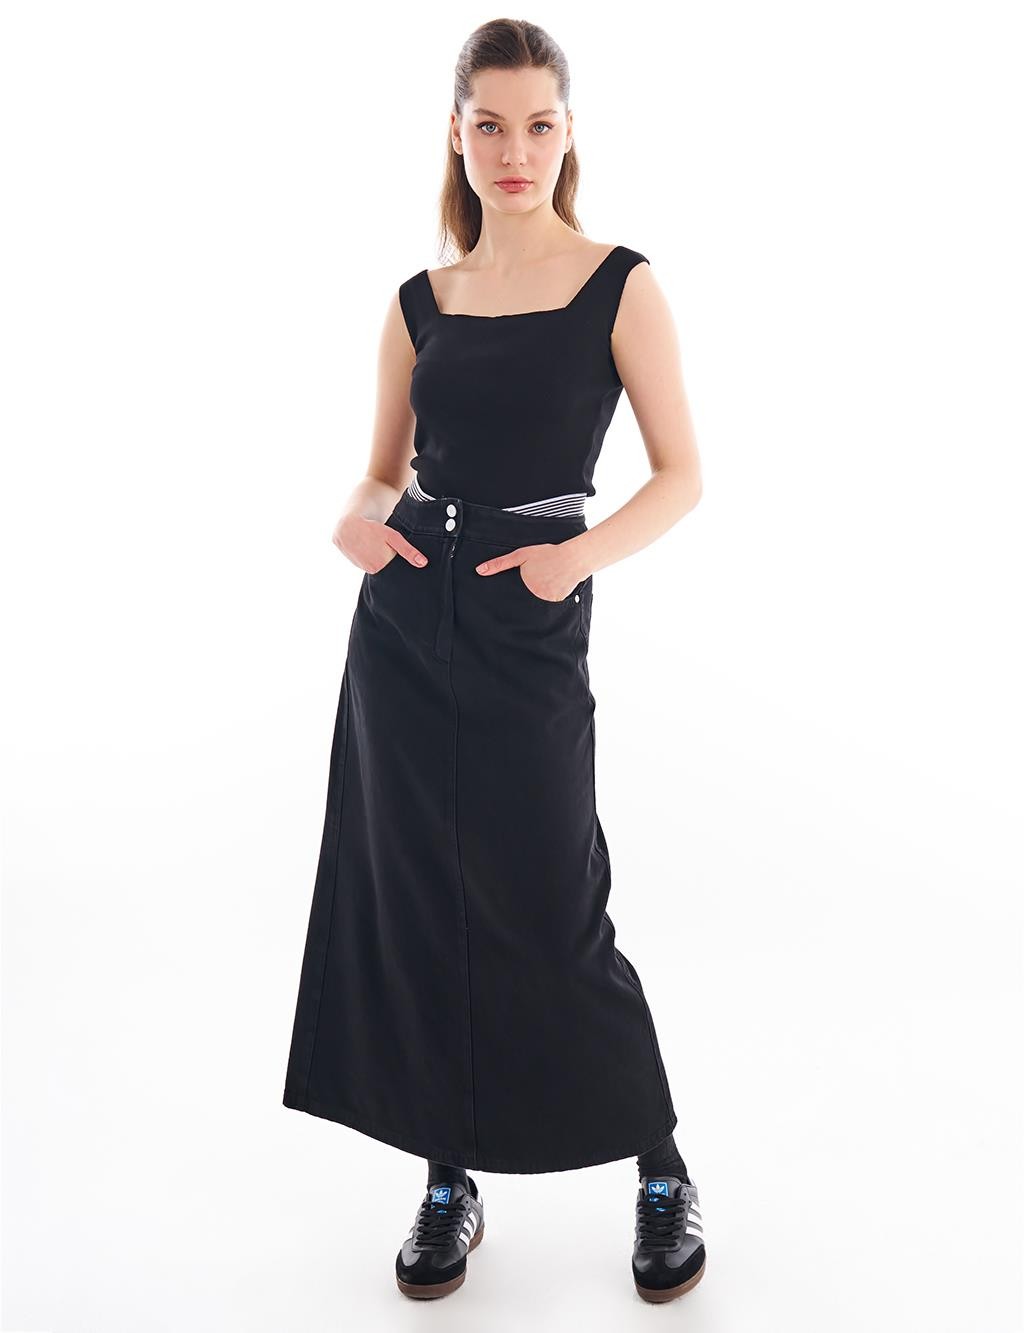 Kayra Skirt 12010 - Black